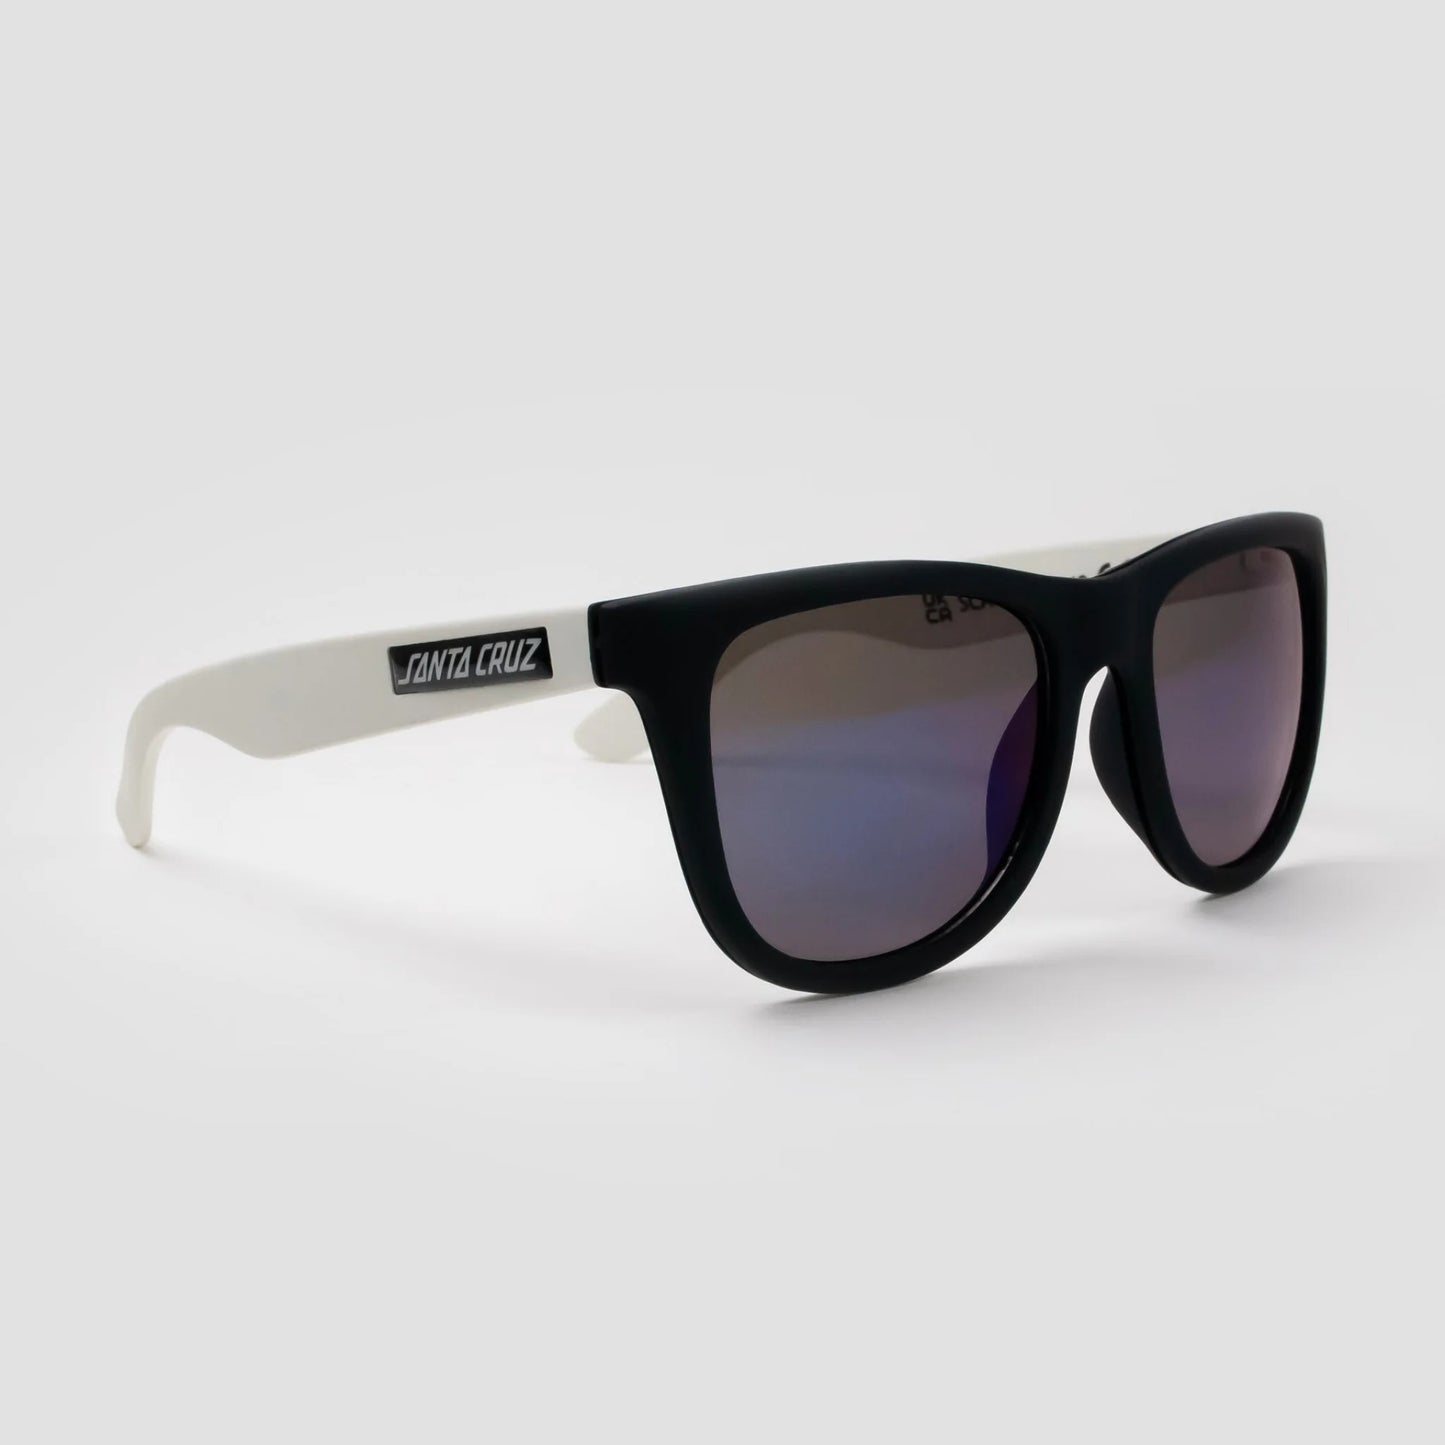 Santa Cruz Darwin Sunglasses - Black/Light Grey - Prime Delux Store